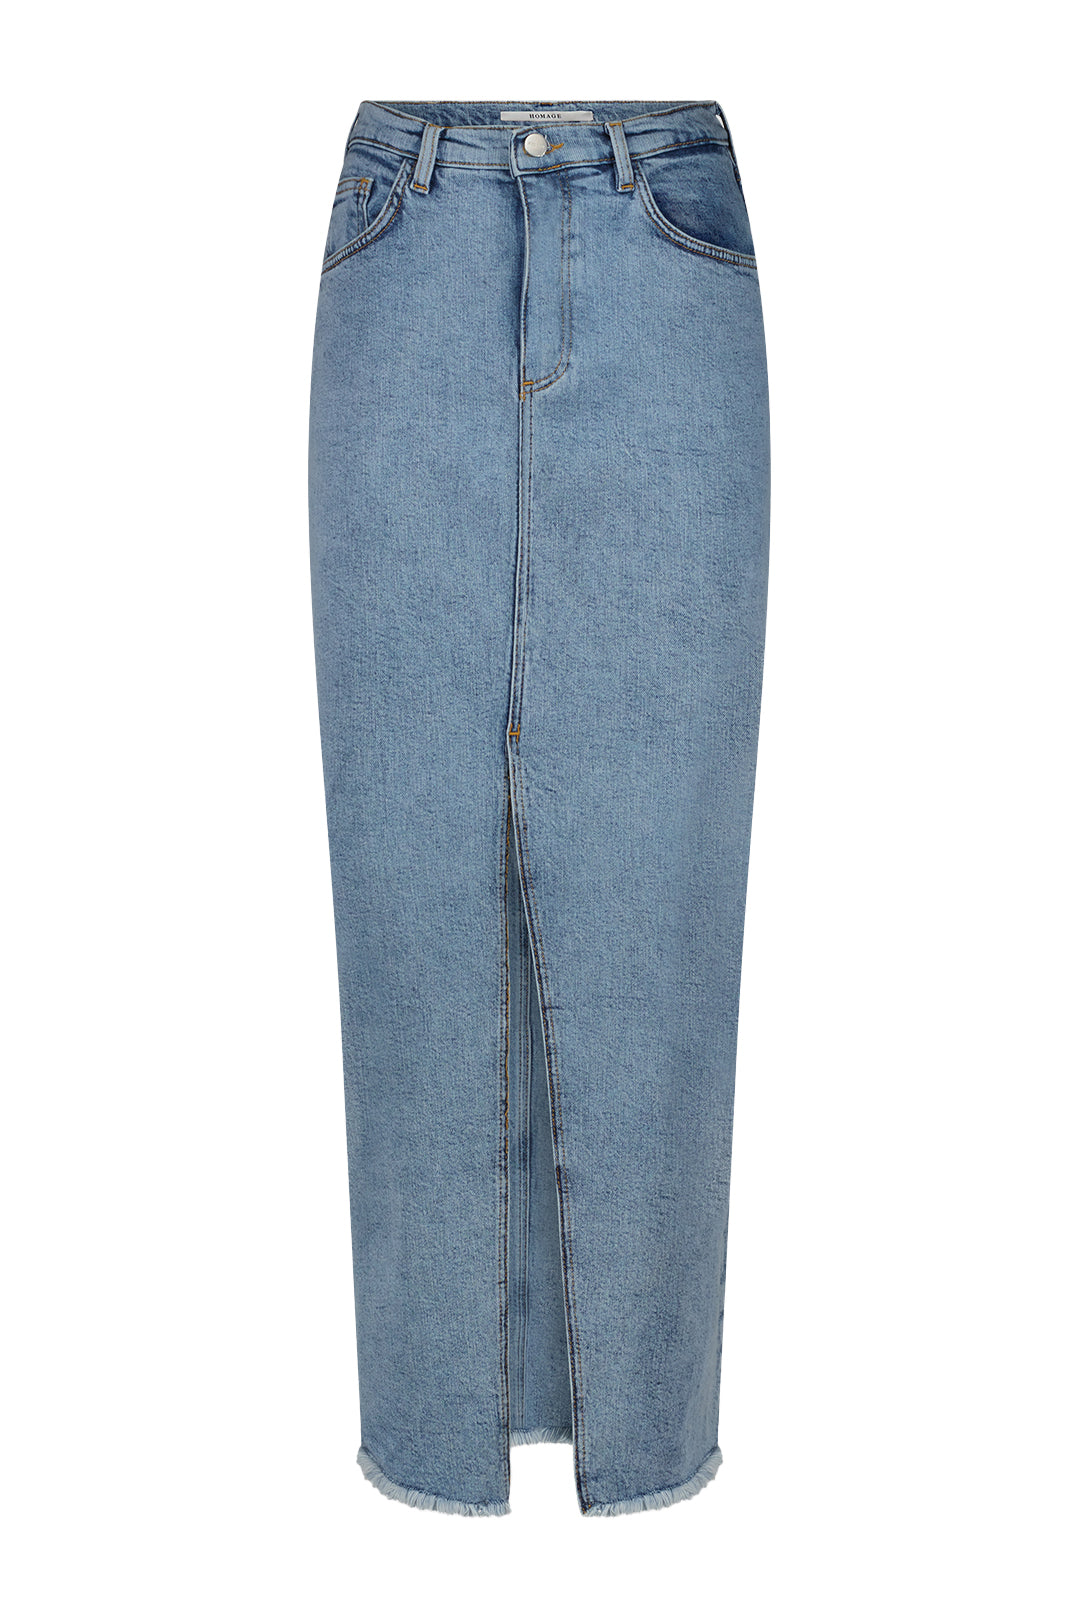 Homage to Denim Long Denim Skirt with Slit - Mid Vintage - RUM Amsterdam